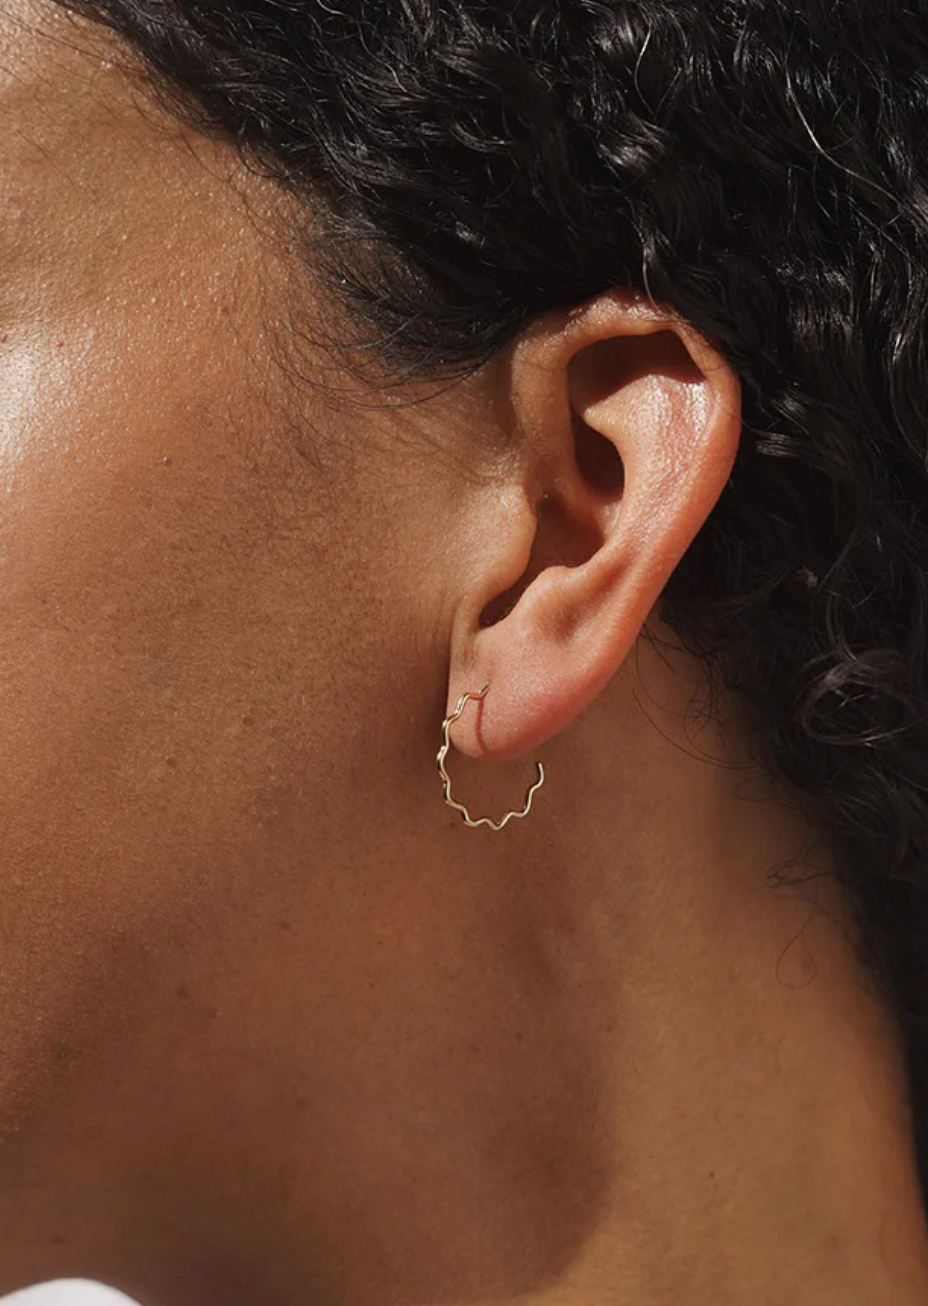 Krinkle Earrings Small - Gold